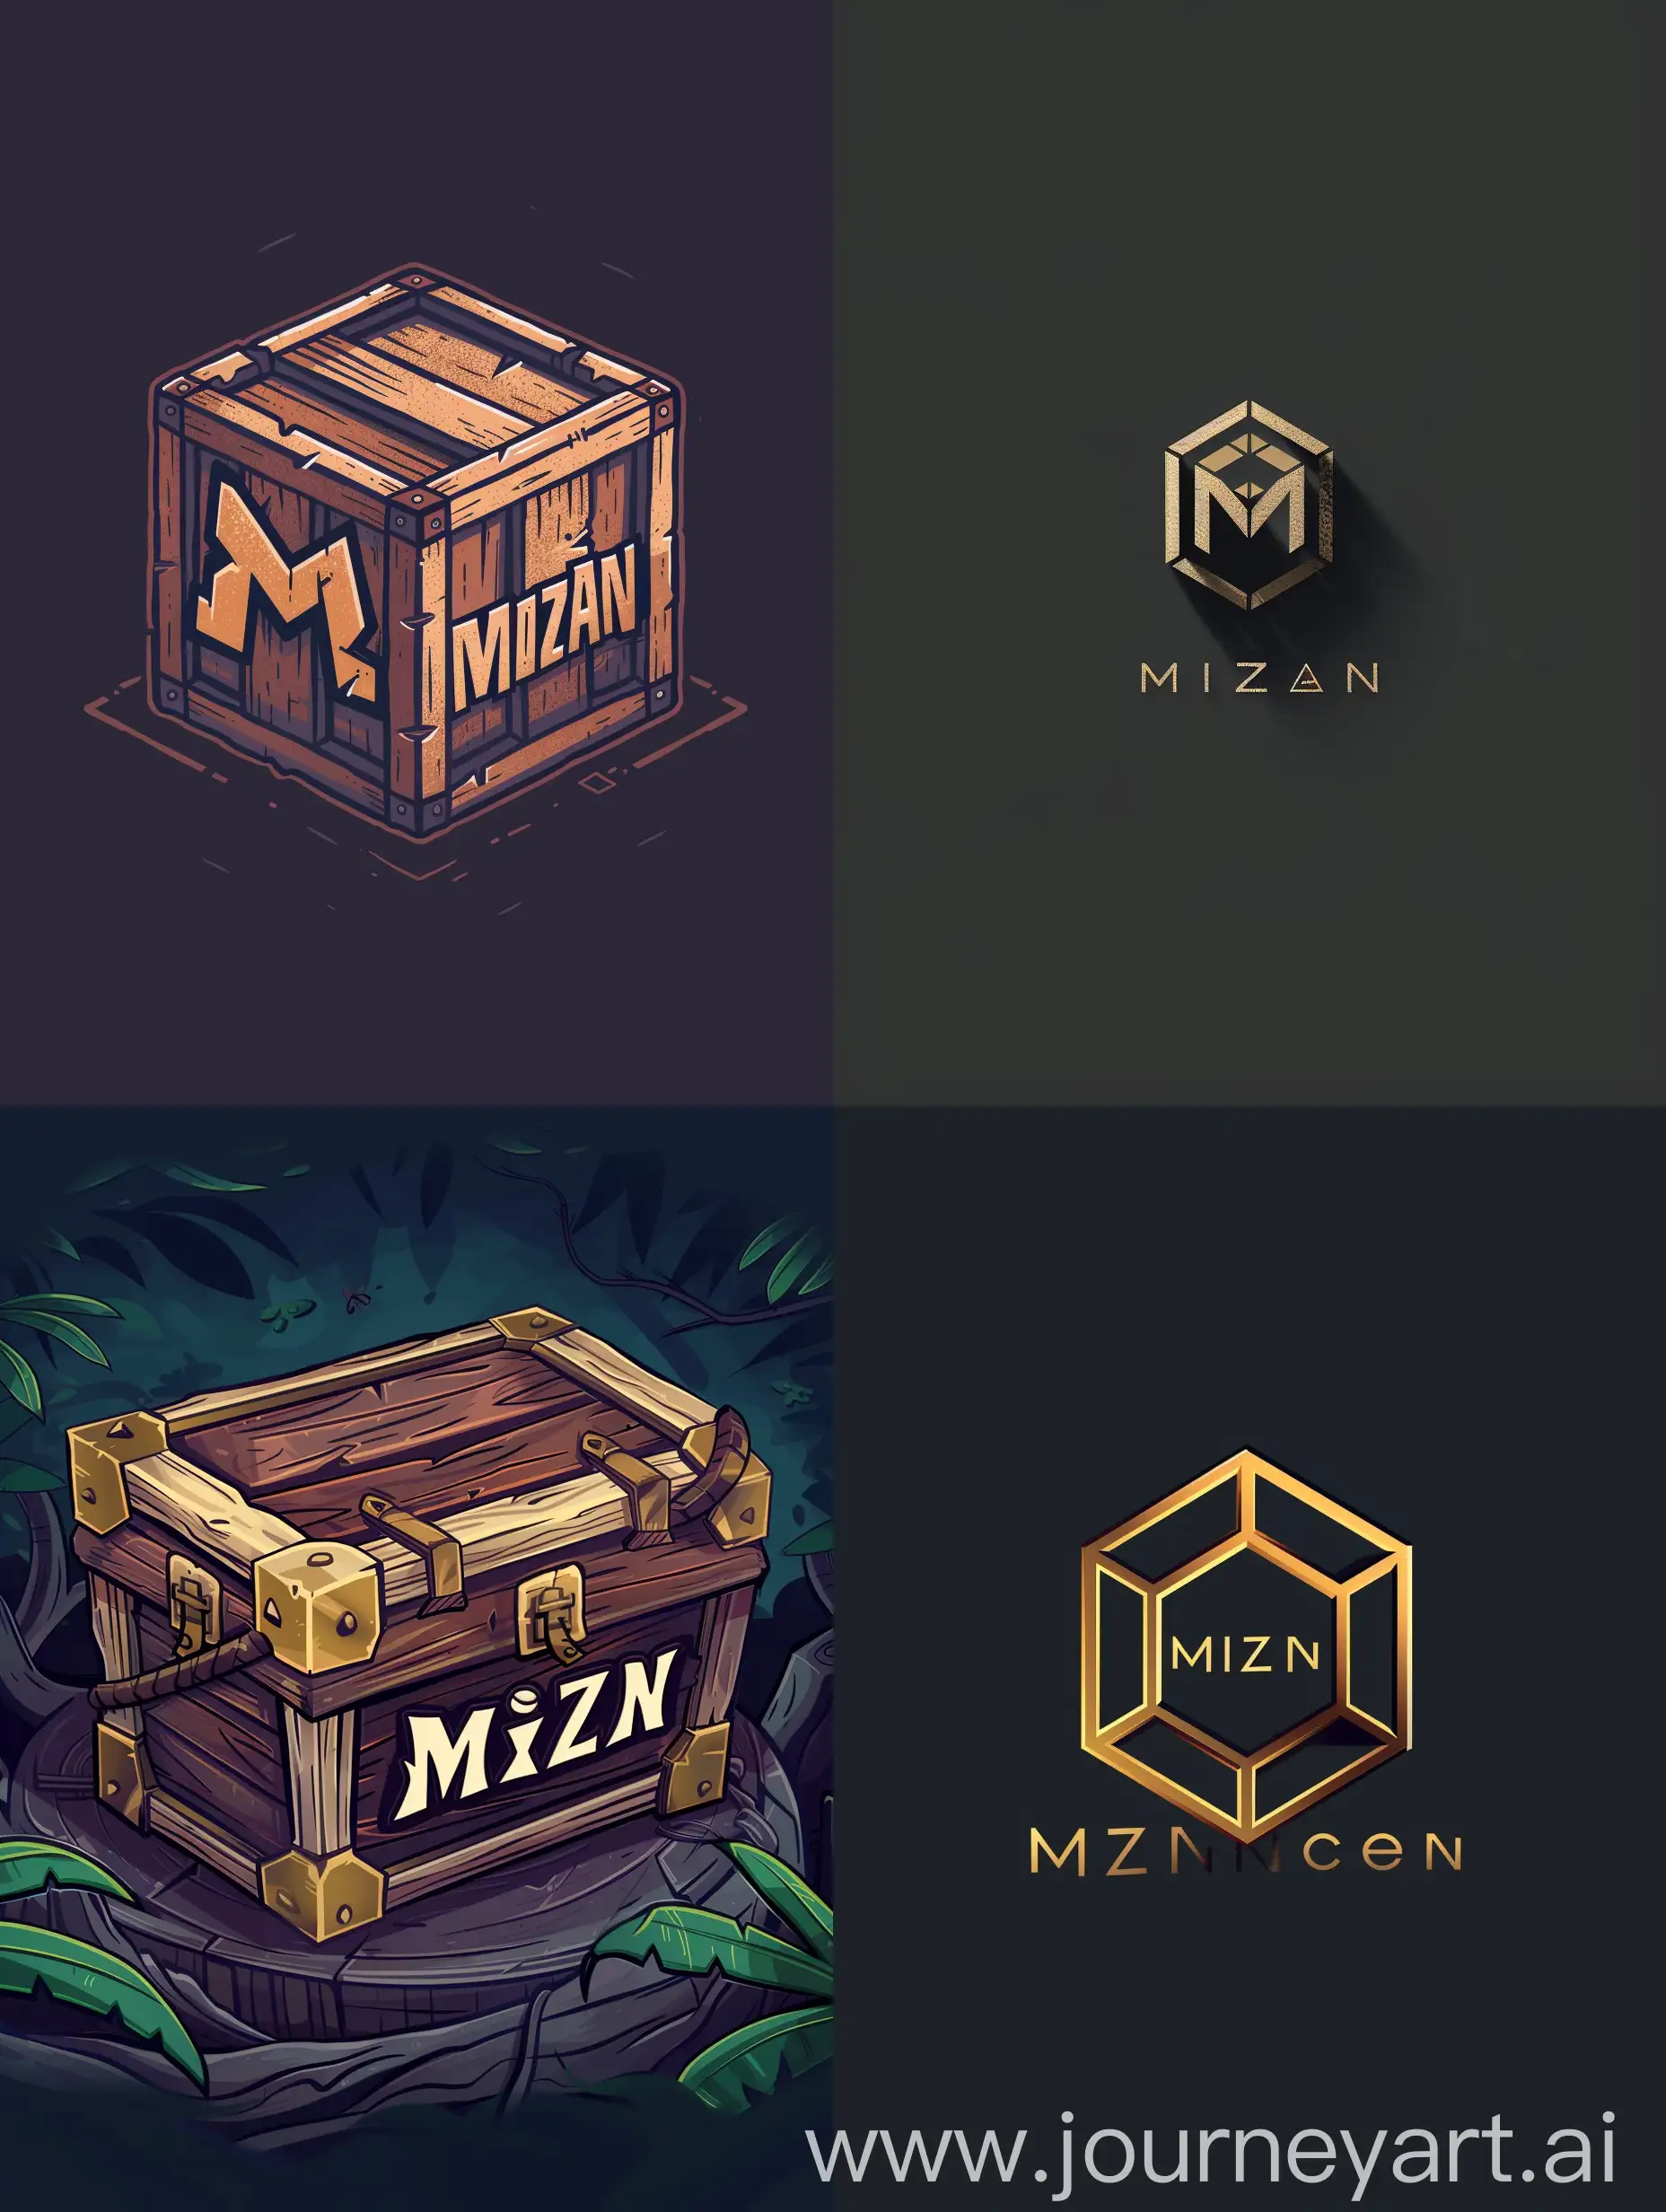 Artistic-Mizan-Logo-Creation-with-Vibrant-Colors-and-Unique-Design